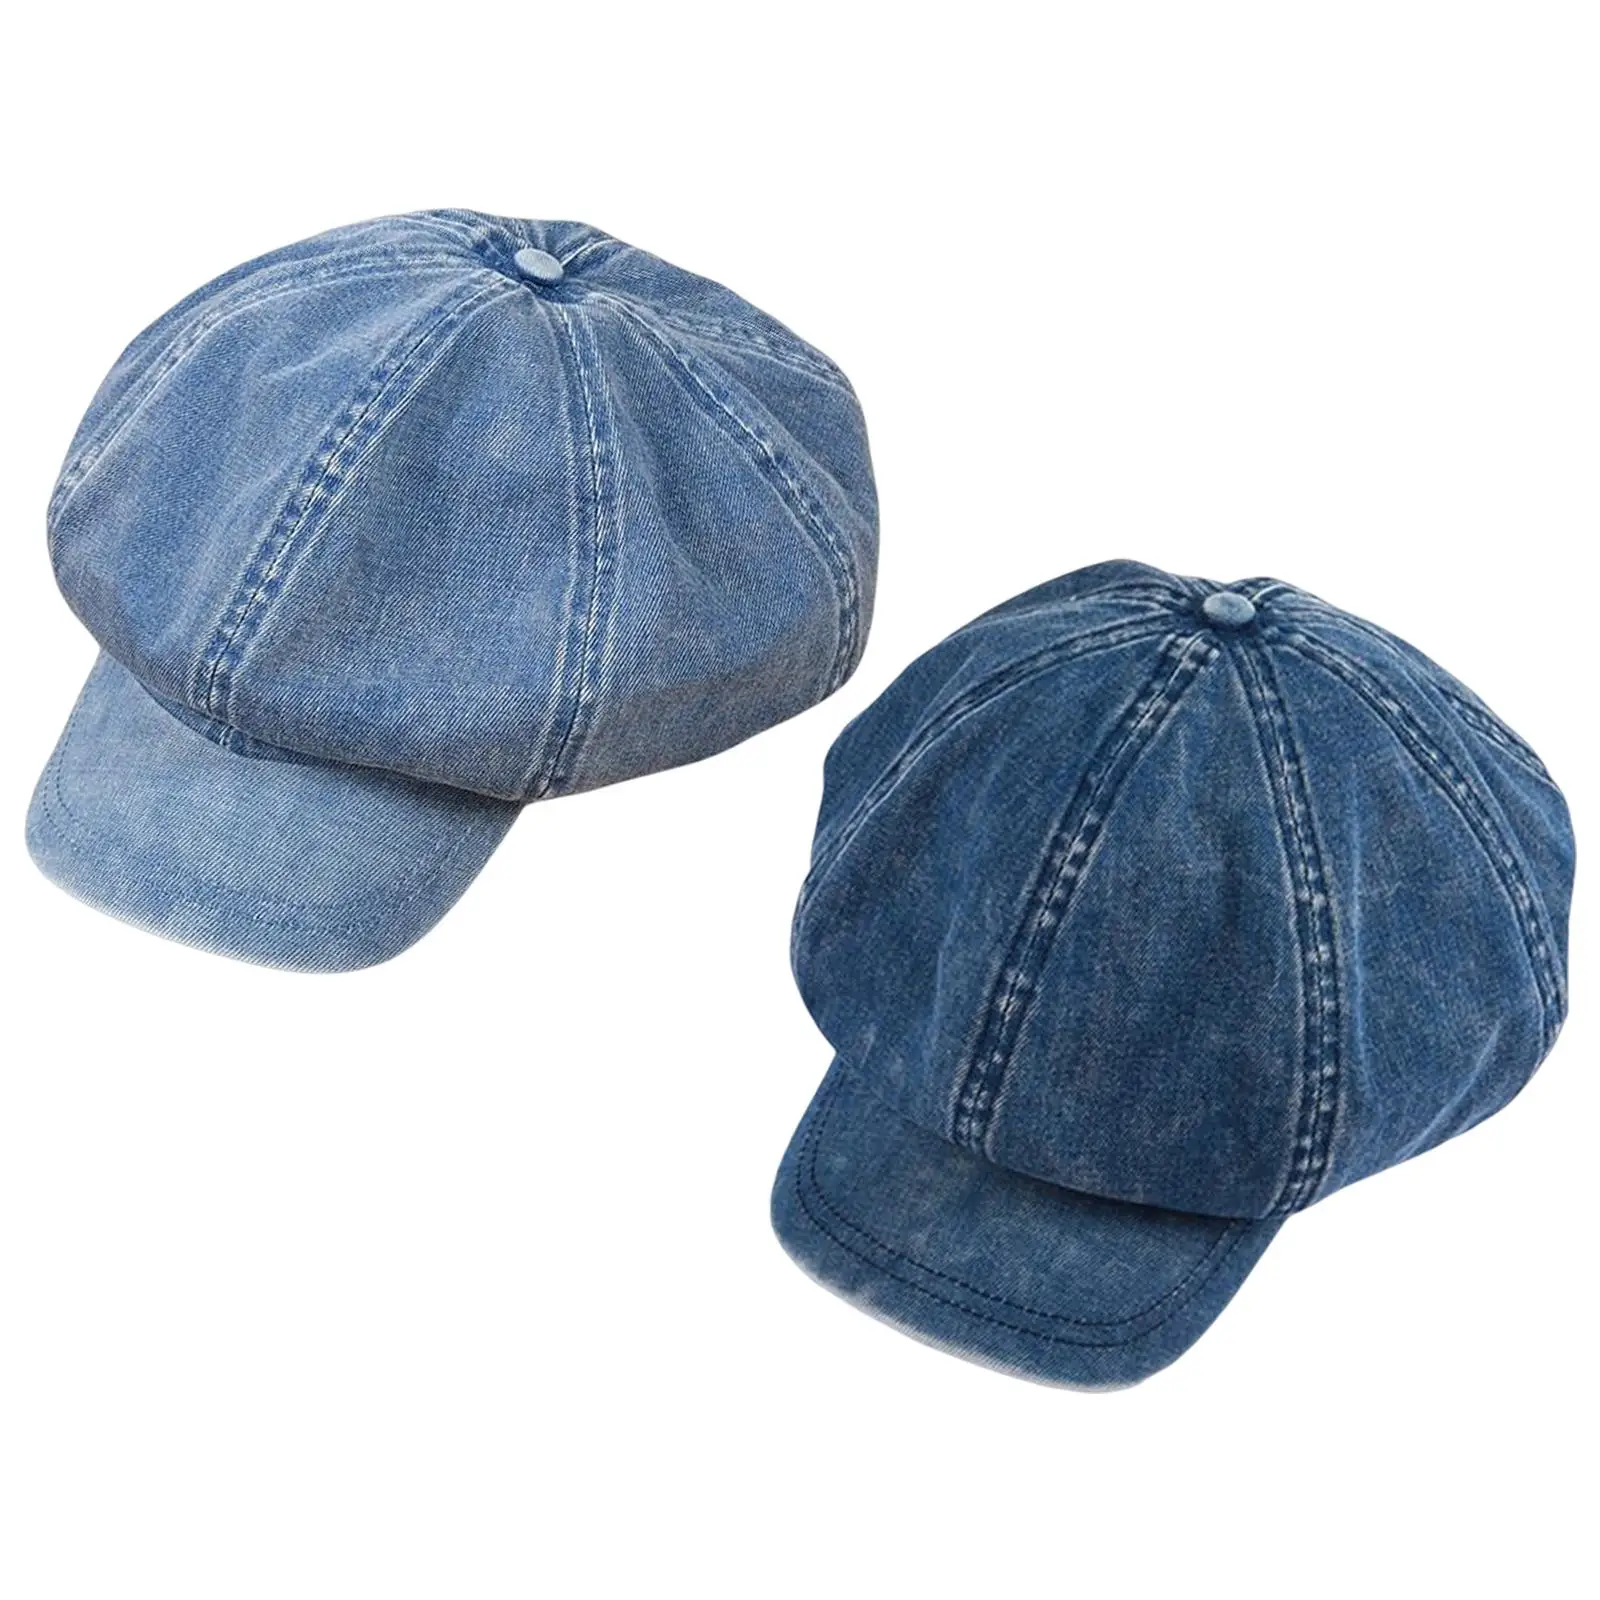  Newsboy Caps Adjustable Visor  Hats Soft 8 Panels Vintage Cabbie Hat Octagonal Caps for Women Girls